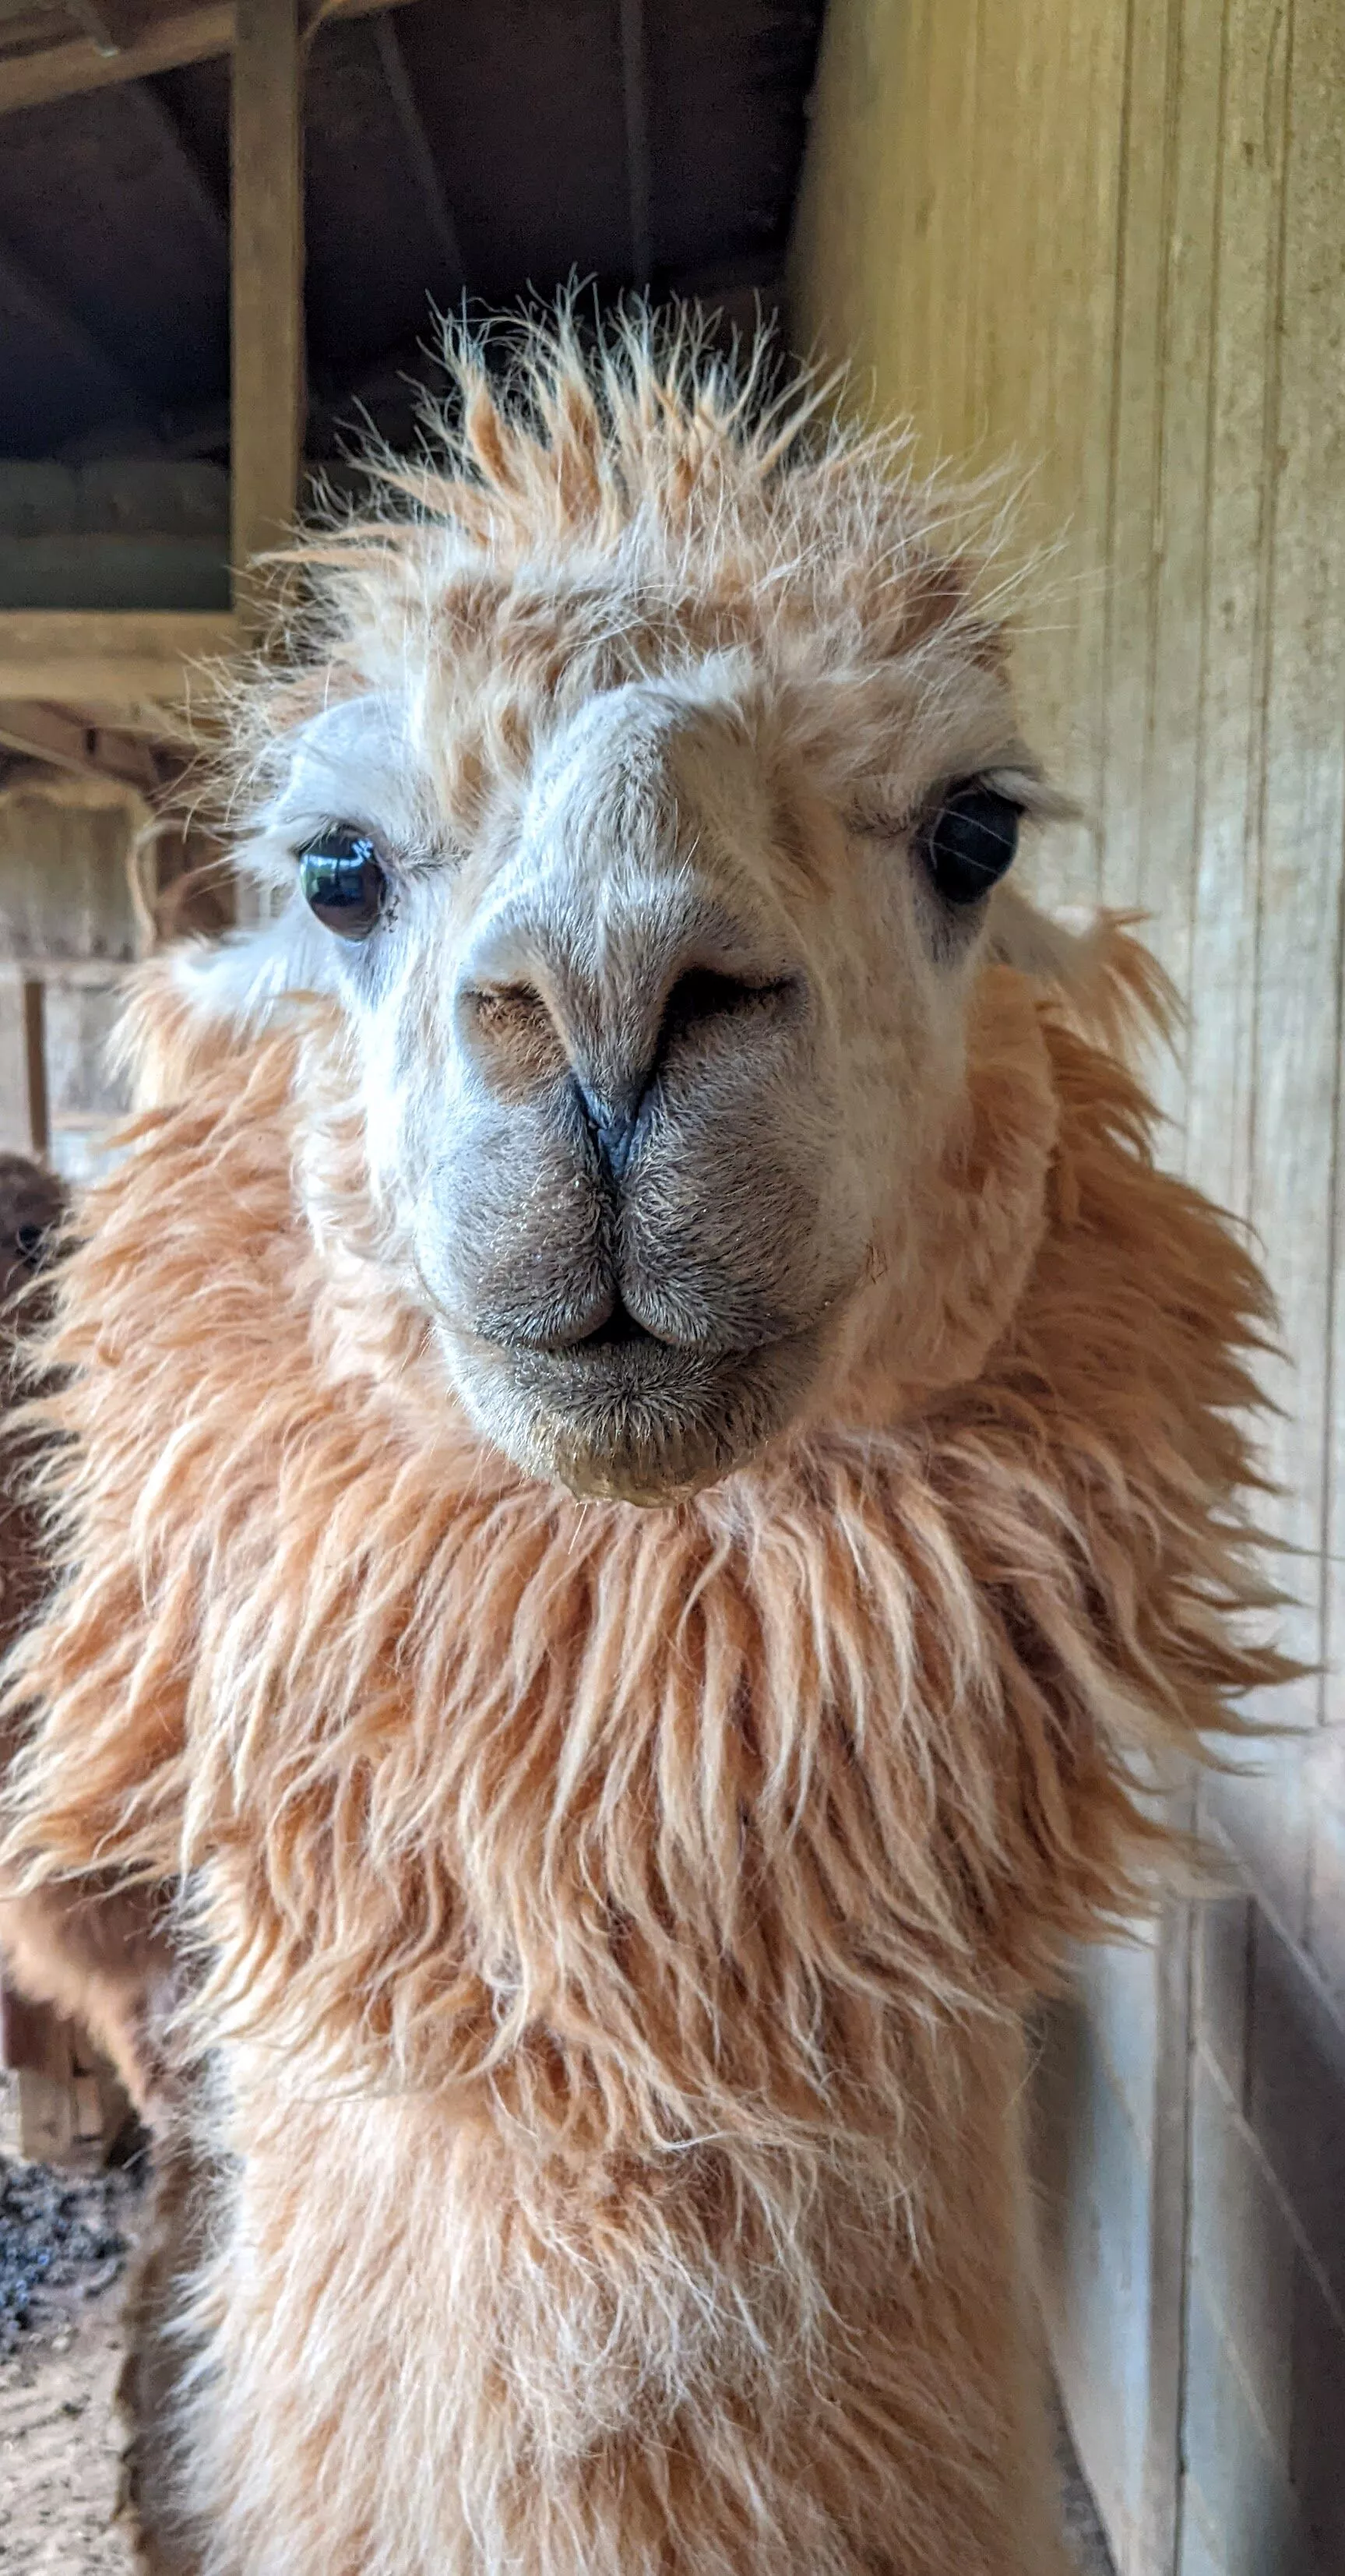 An image of a llama named Pellegrino